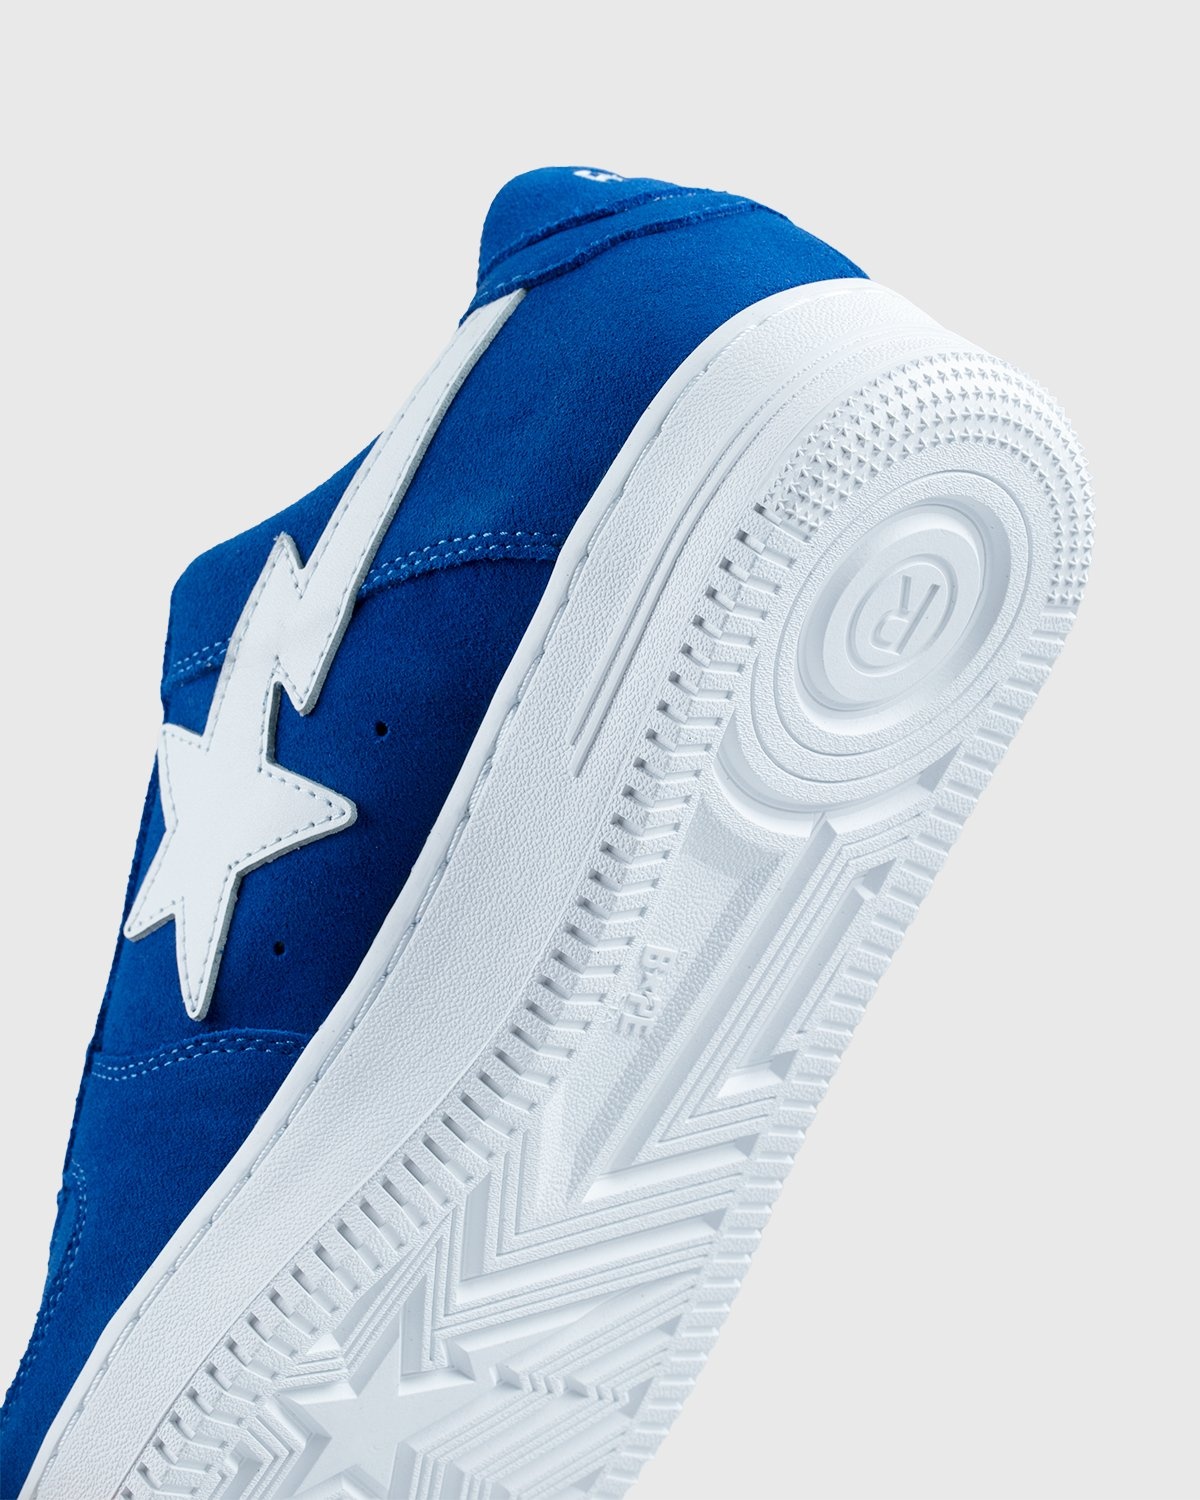 BAPE x Highsnobiety – BAPE STA Blue - Sneakers - Blue - Image 5